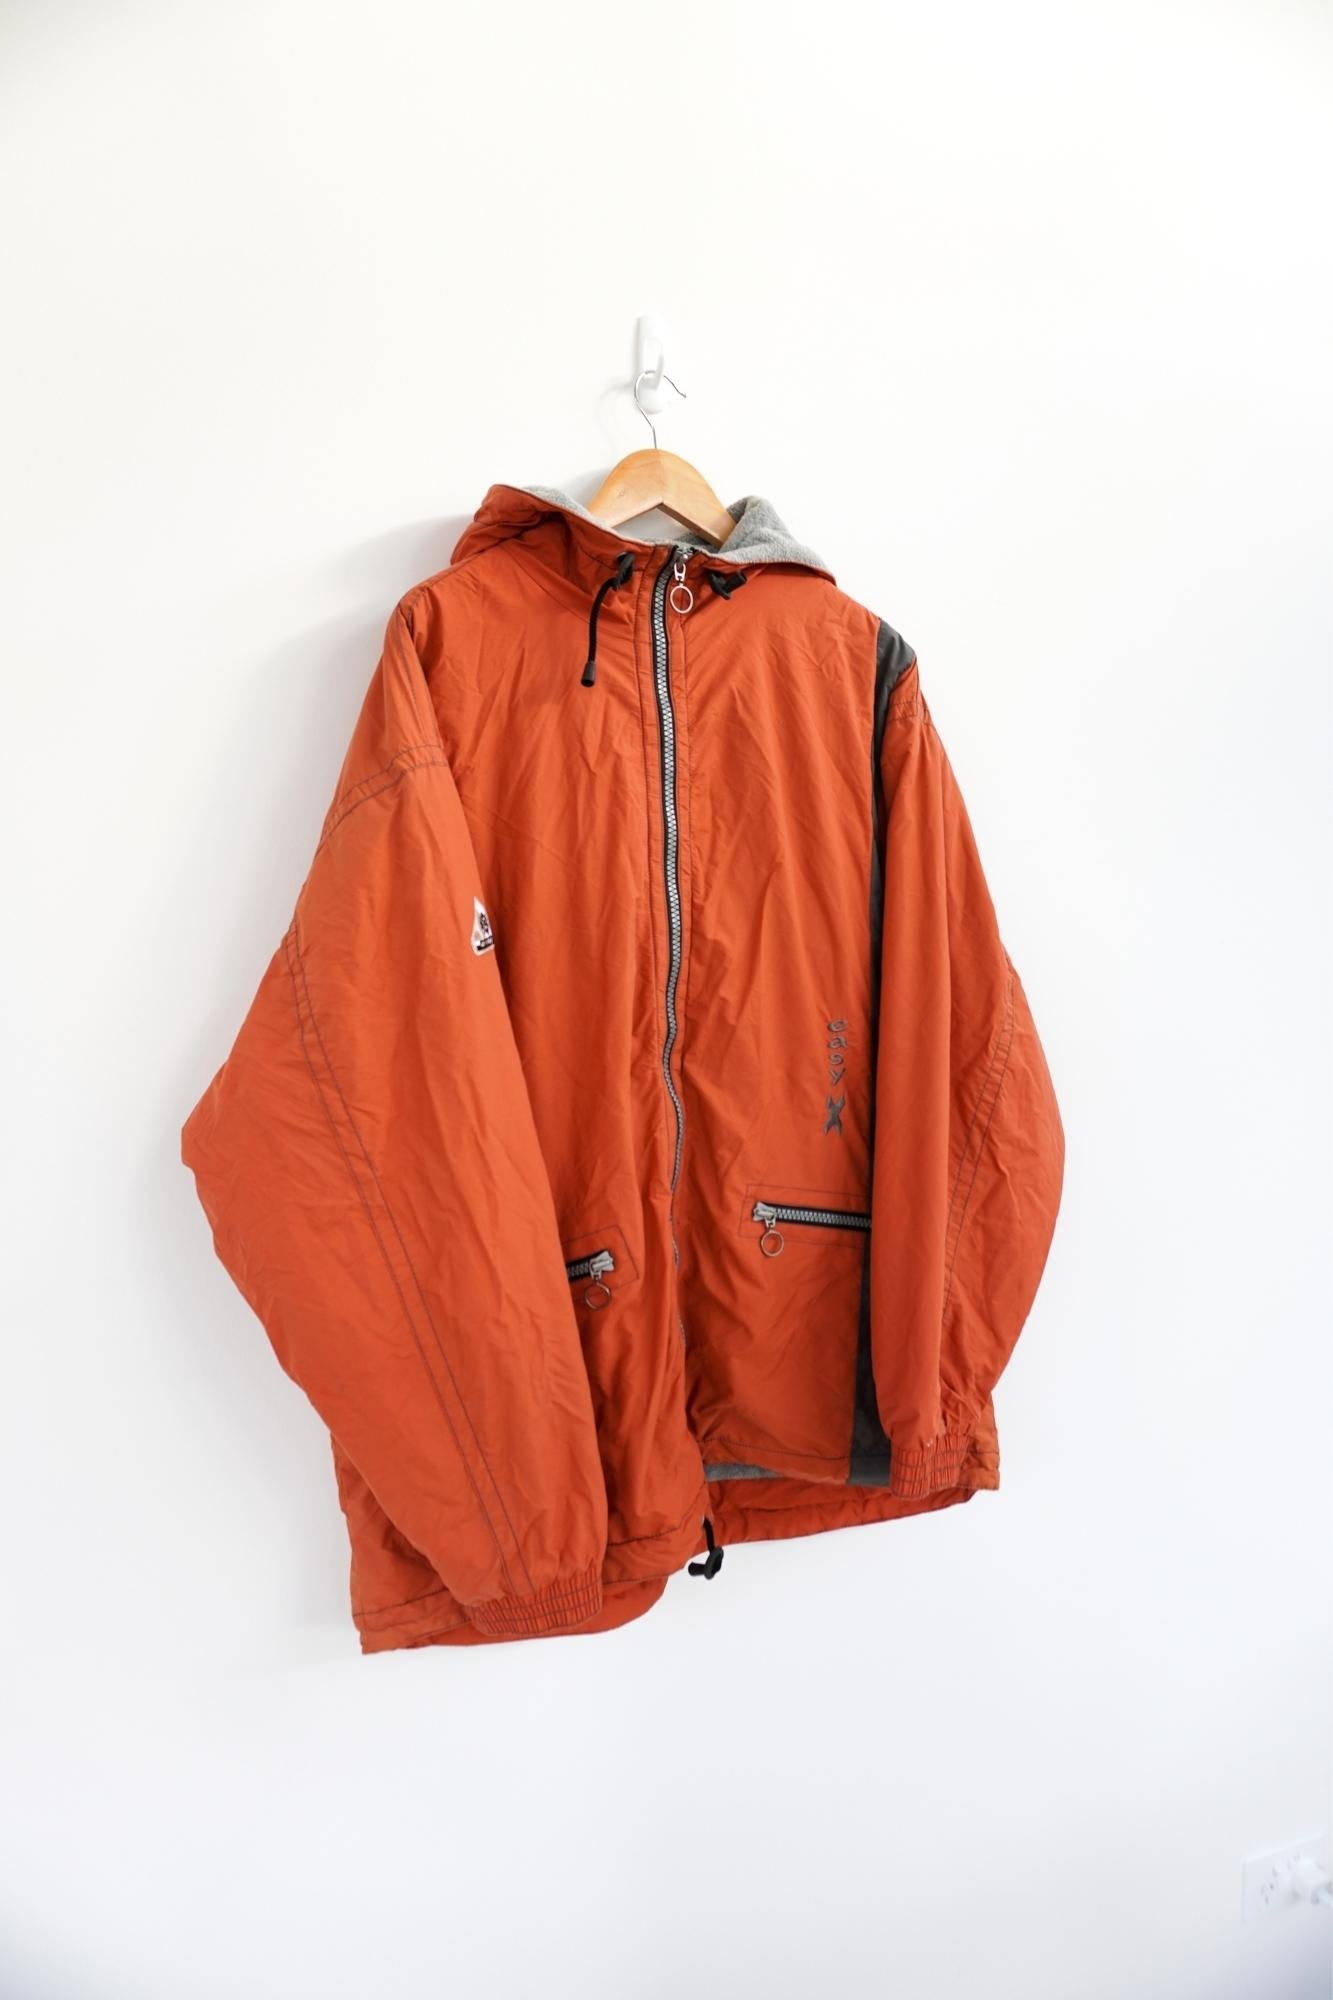 Easy X Orange Vintage Ski Jacket